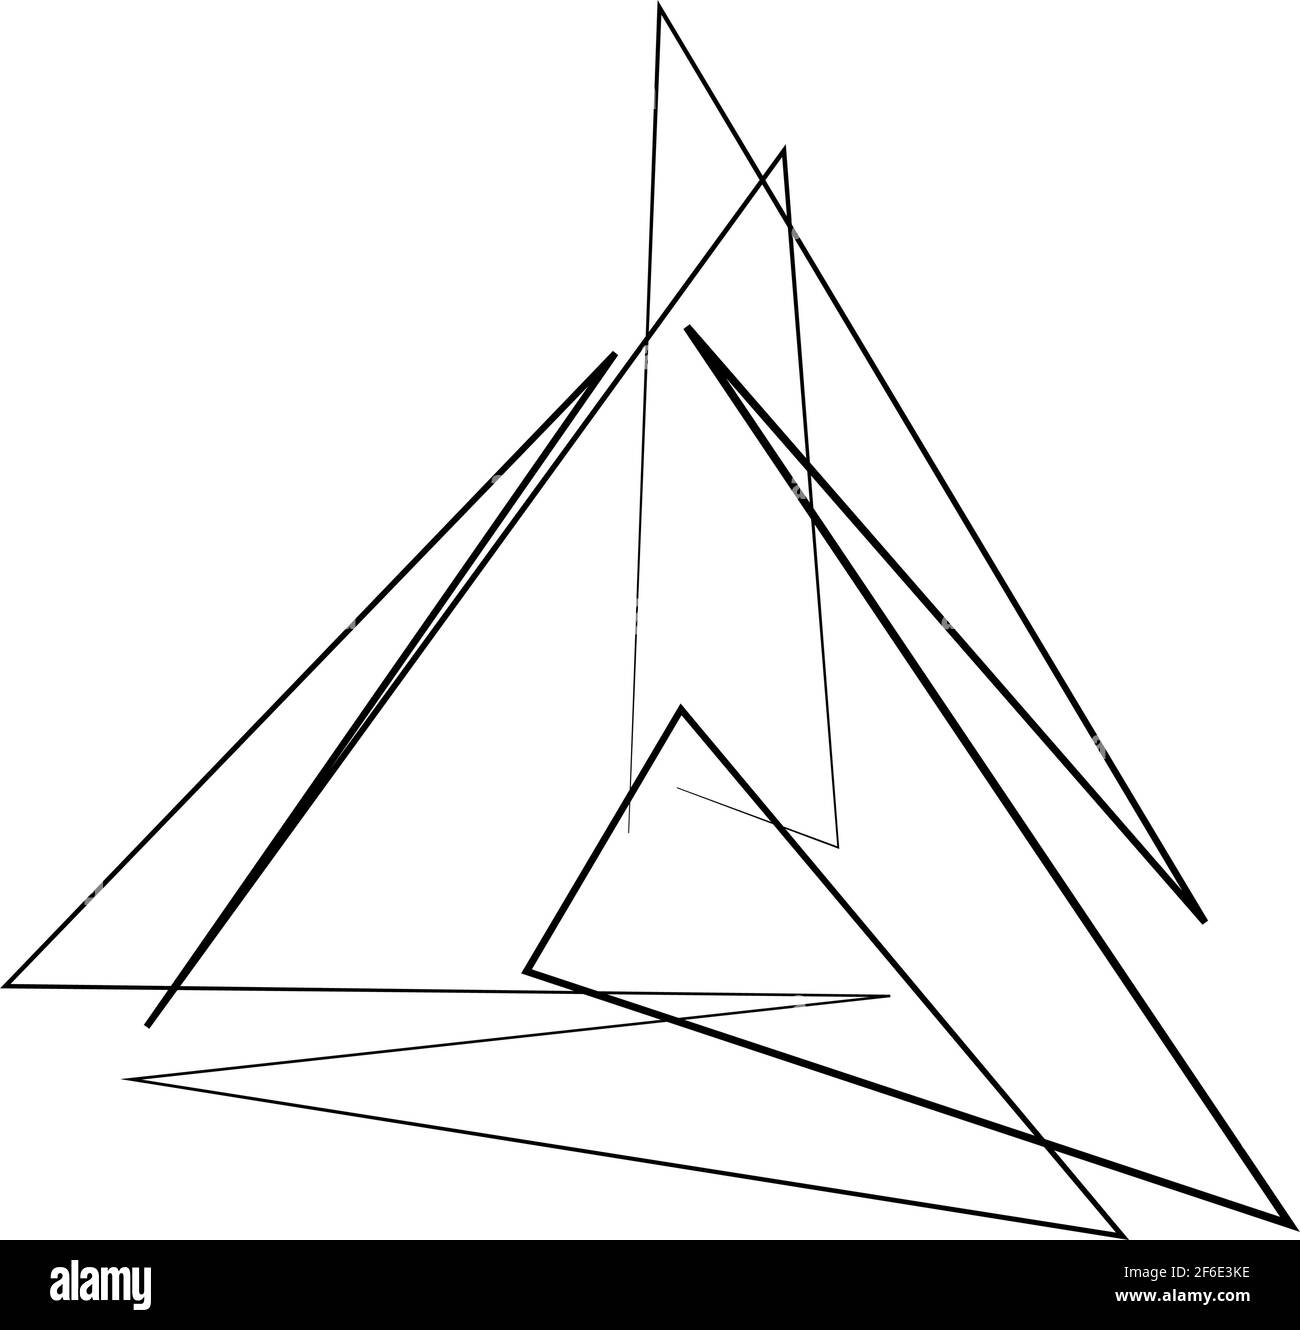 Abstract edgy, geometric line art. Angular random, chaotic lines